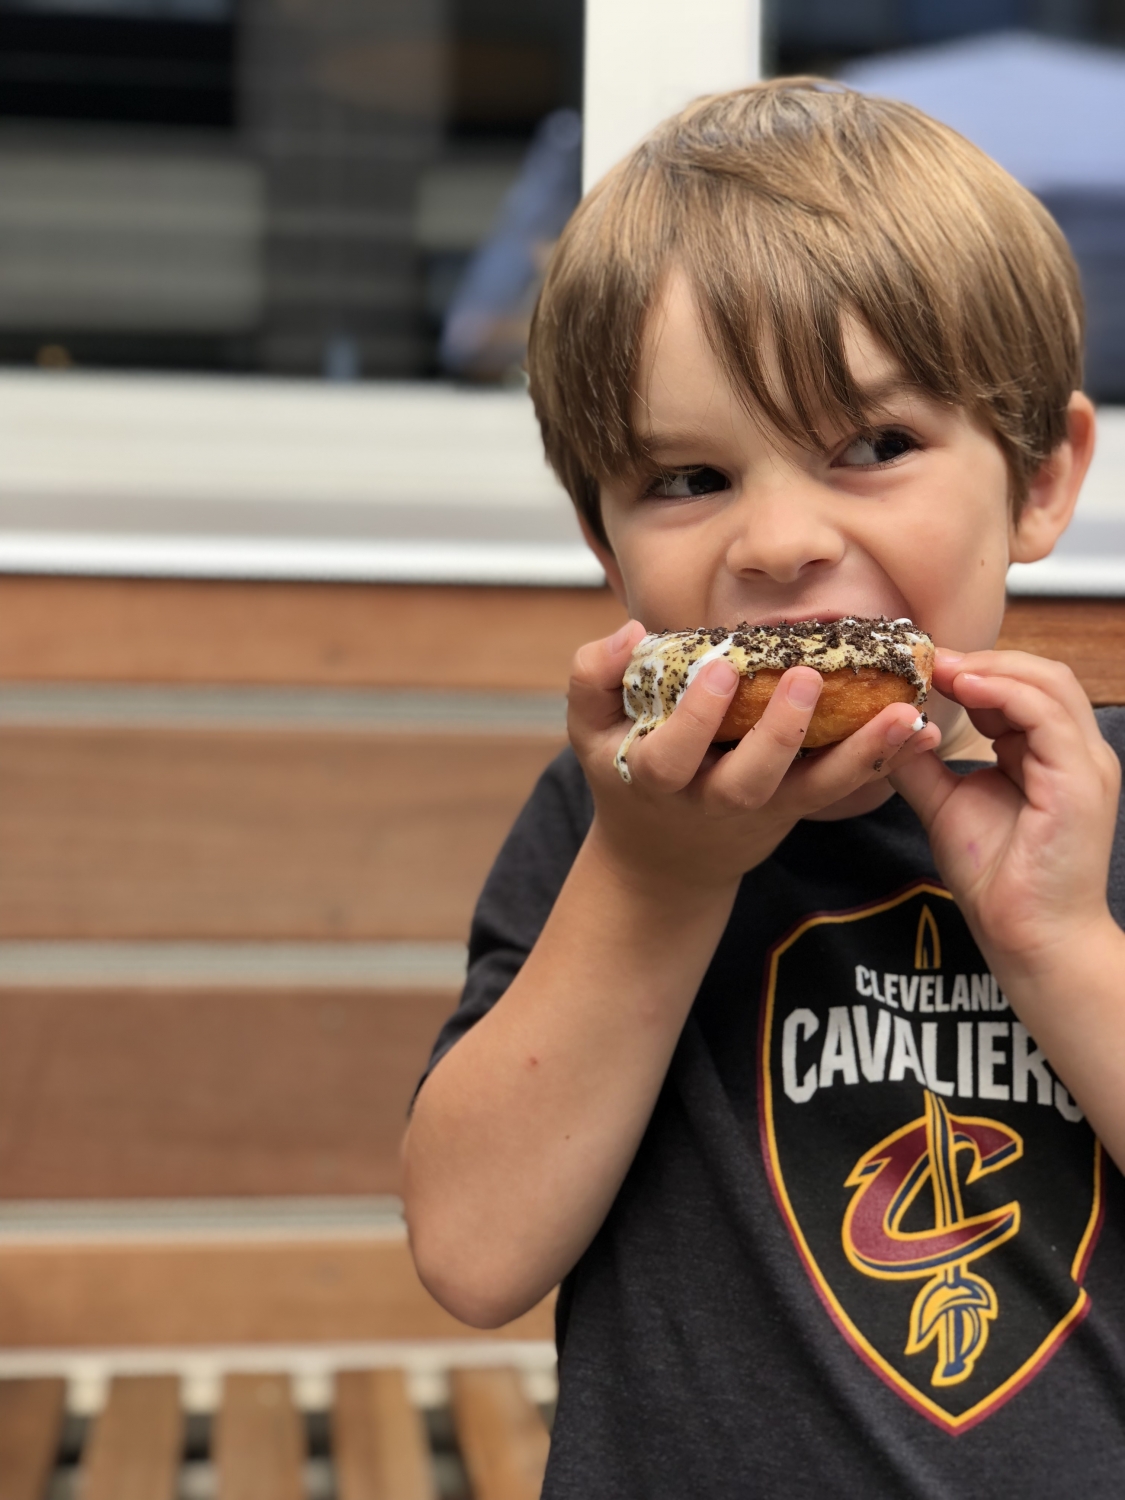 boy eating a donut at the dublin market 